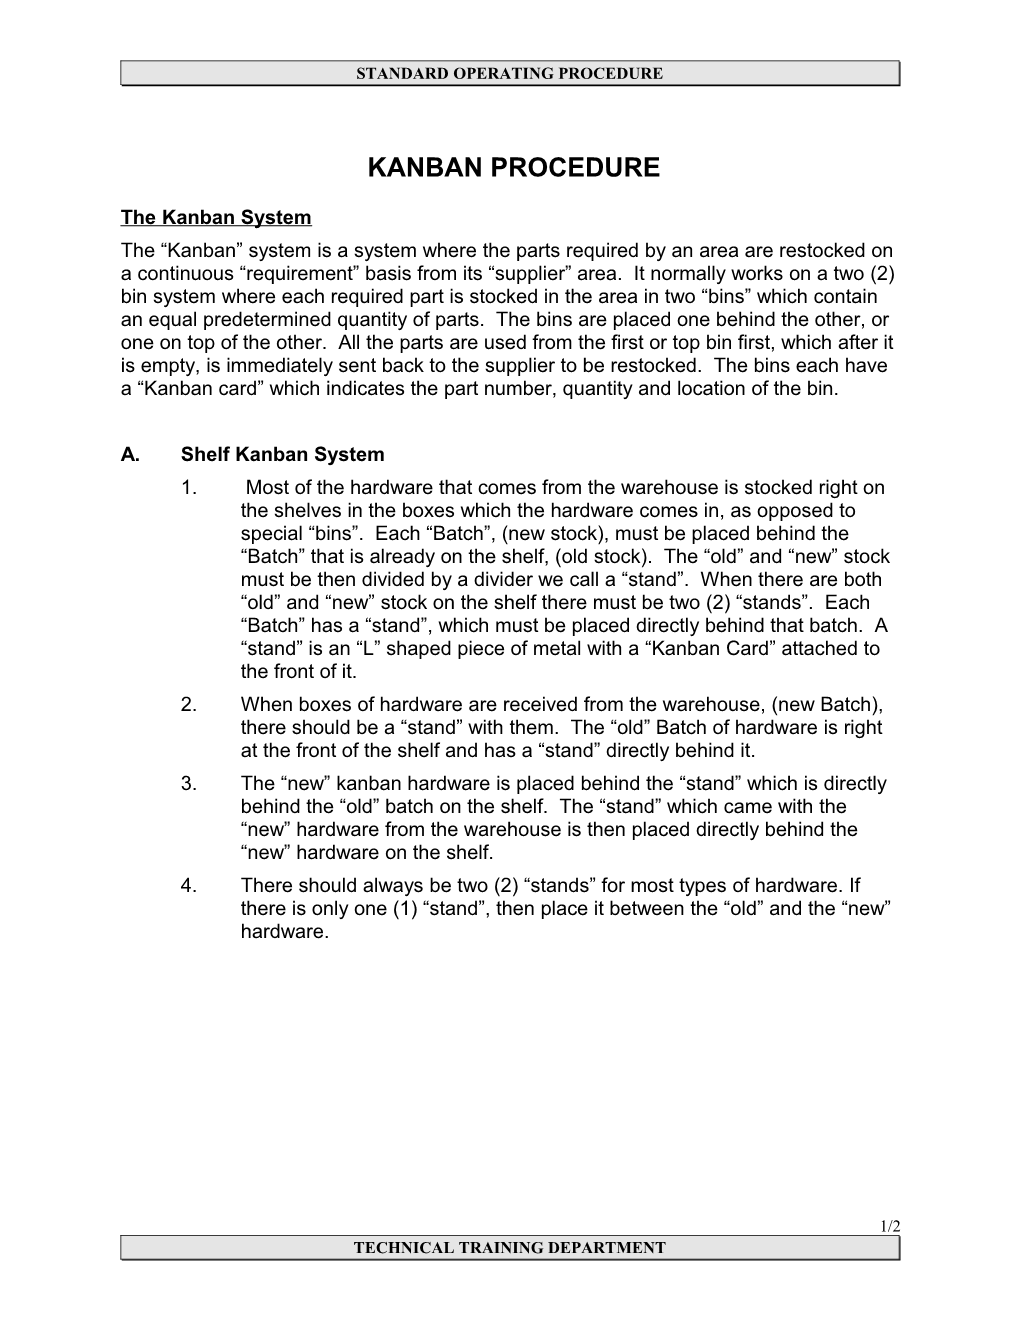 Tlpt/Sept Kanban Procedure